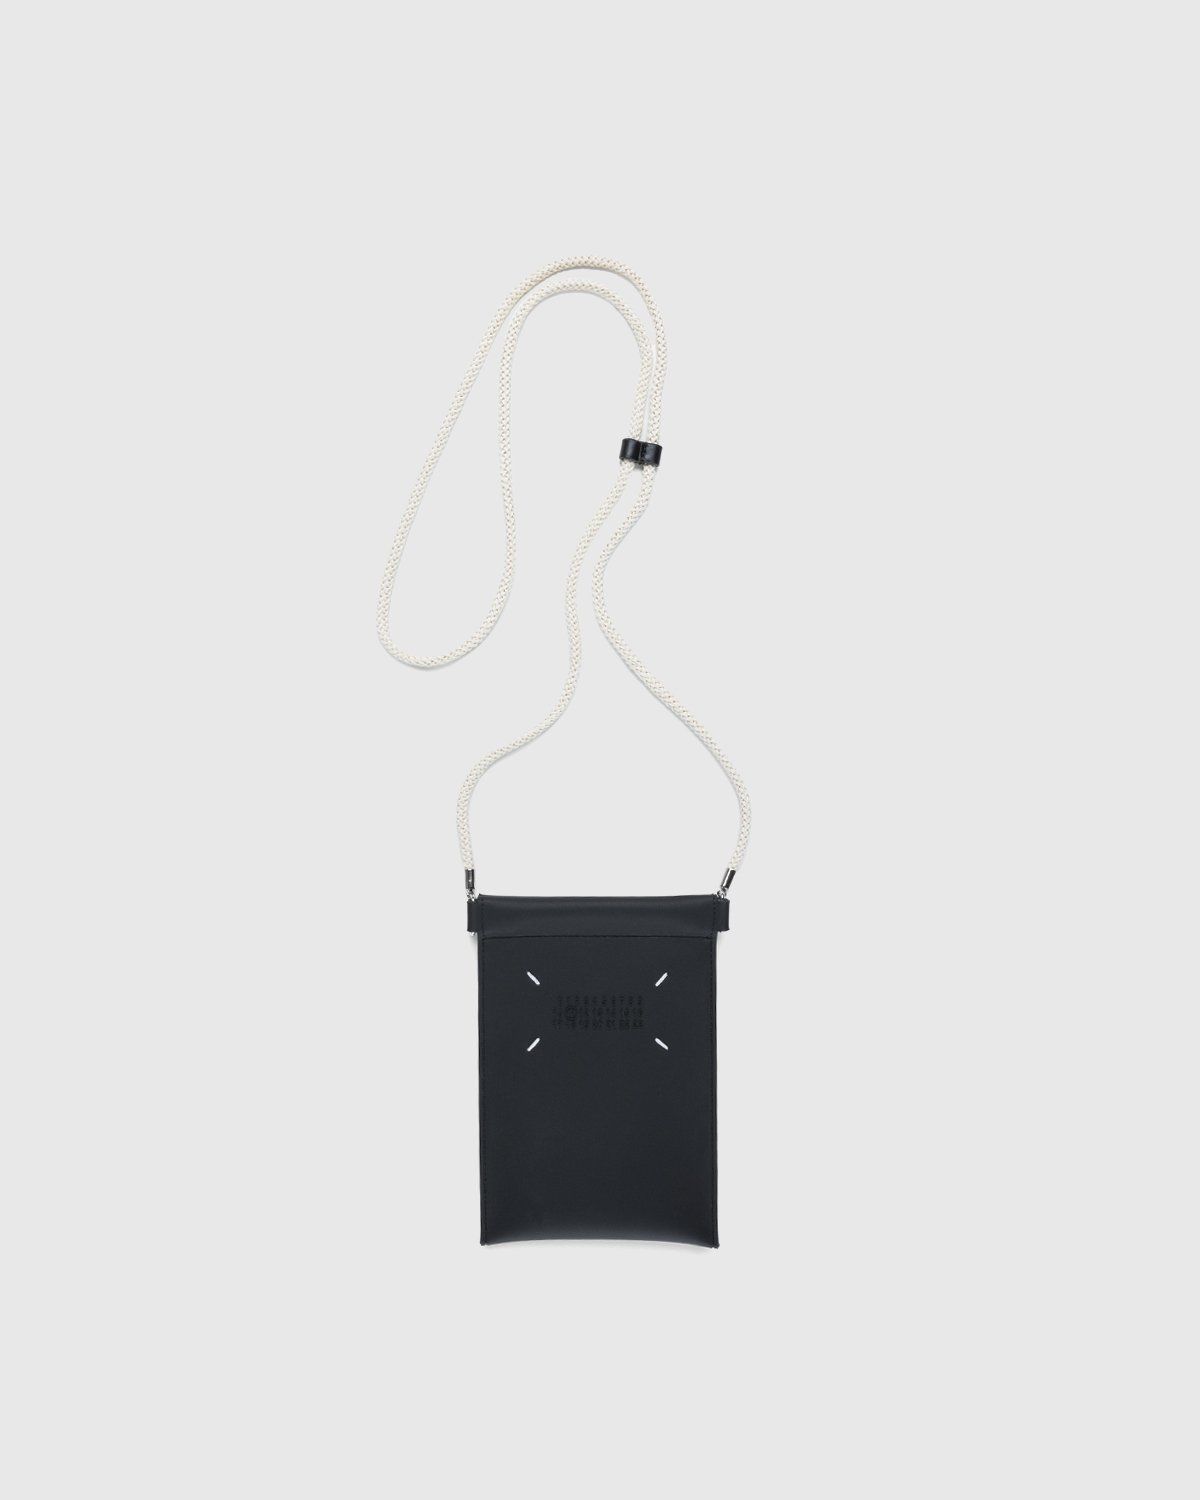 Maison Margiela – Rubber Leather Phone Case Black - Phone cases - Black - Image 1